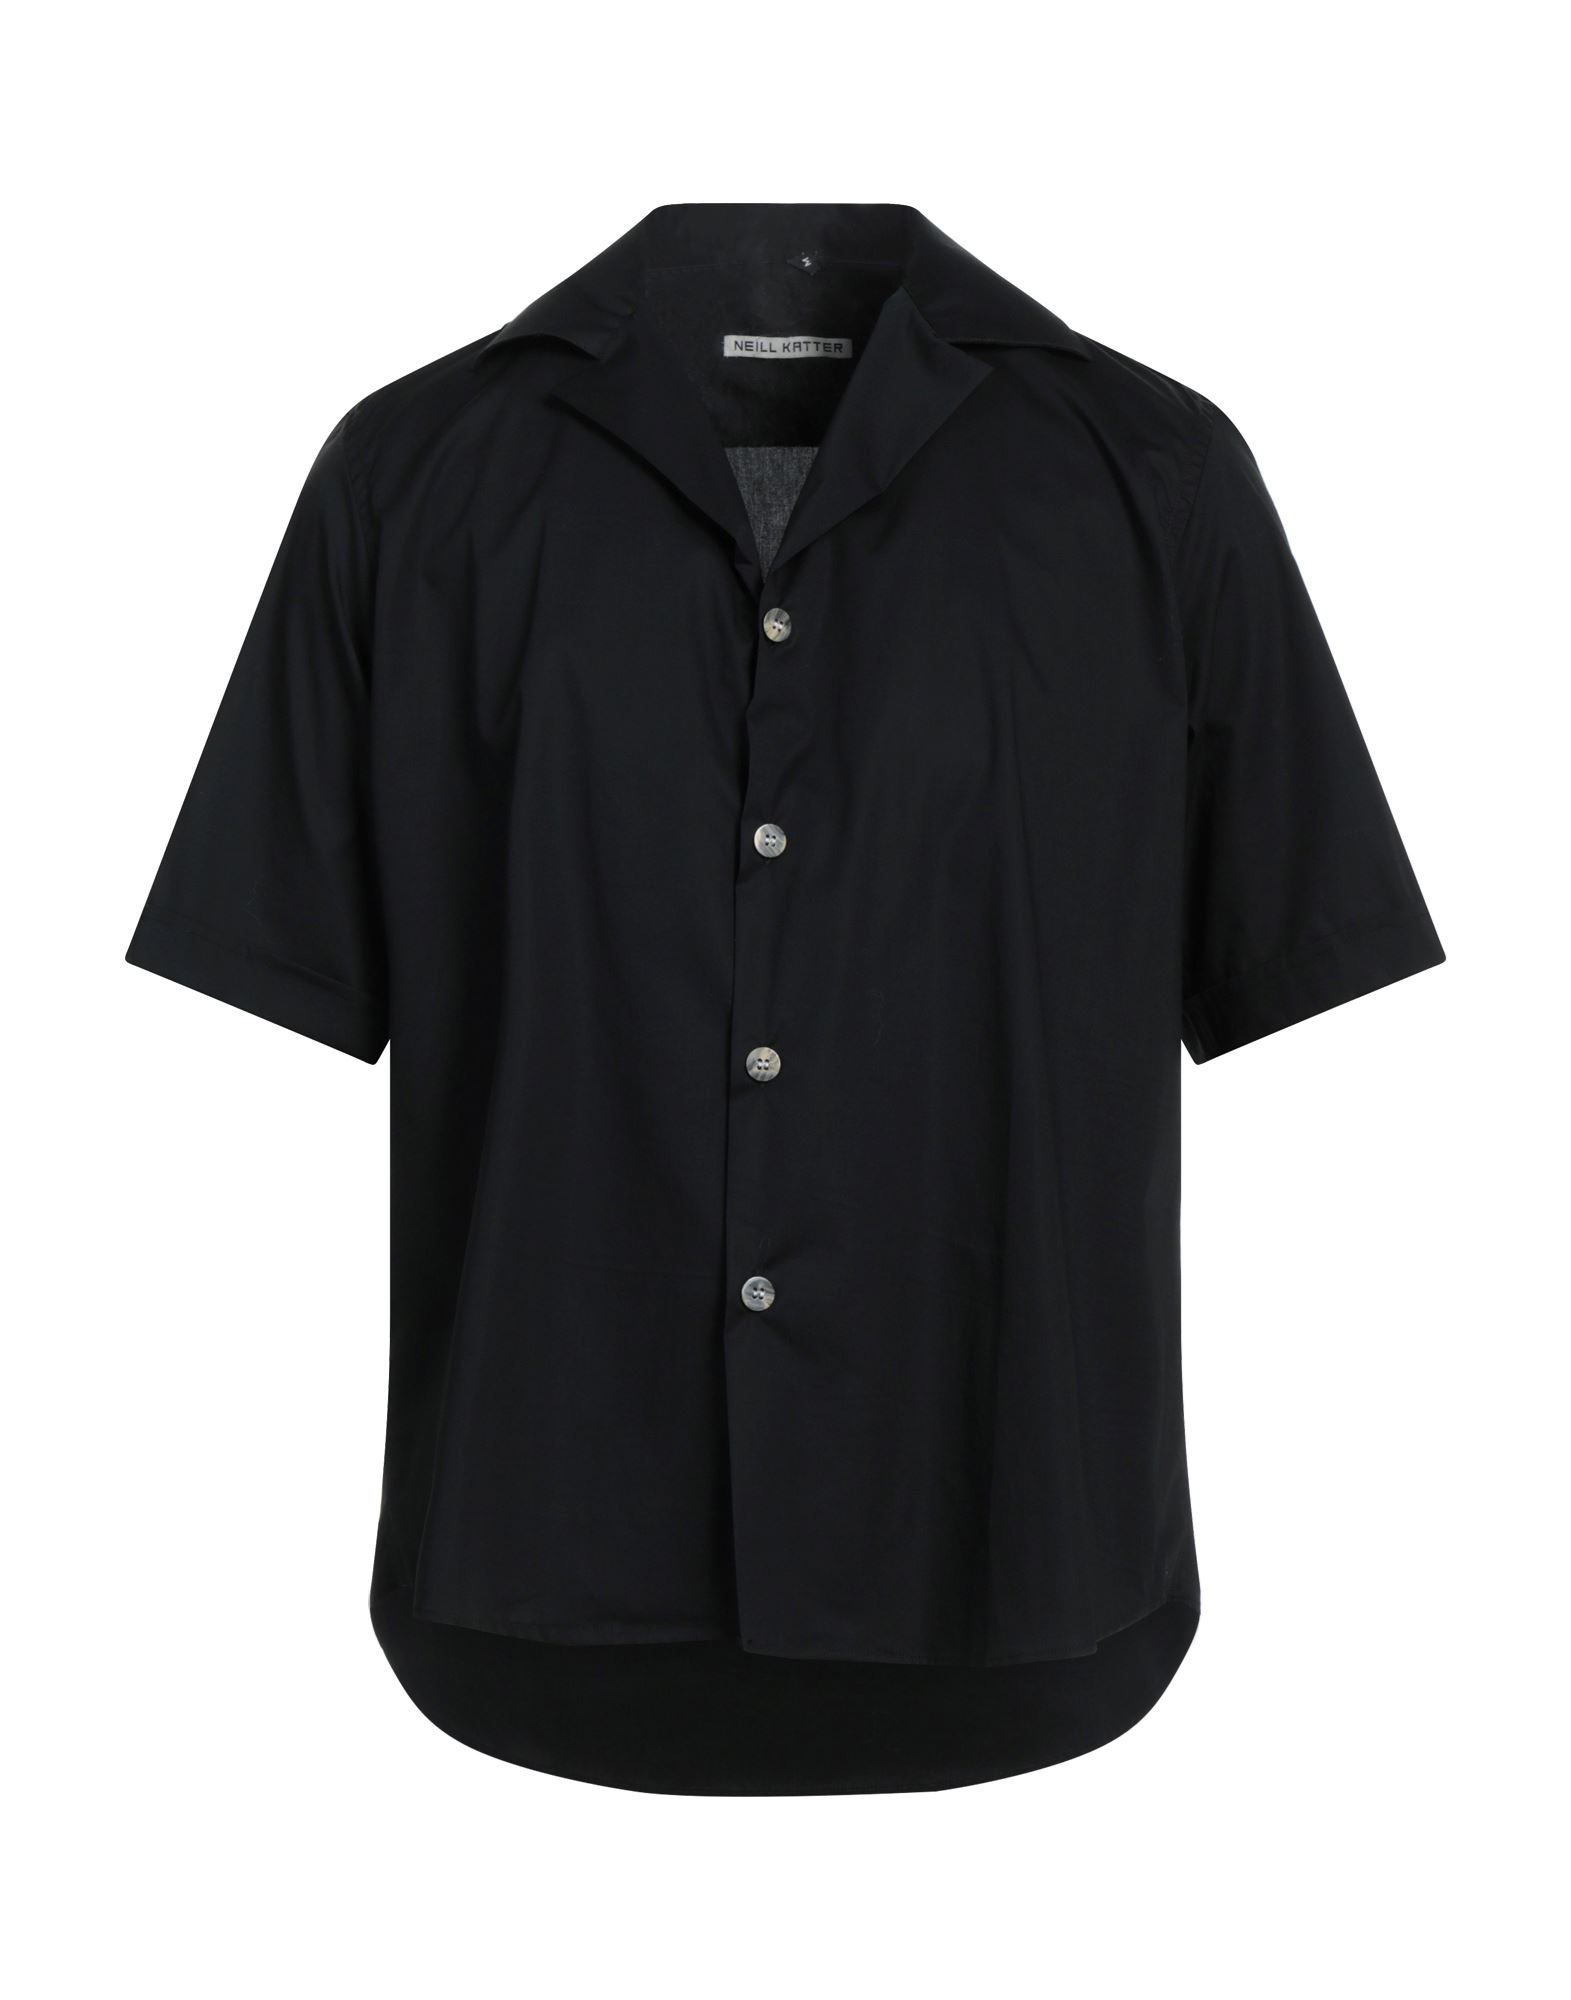 Neill Katter Shirts In Black